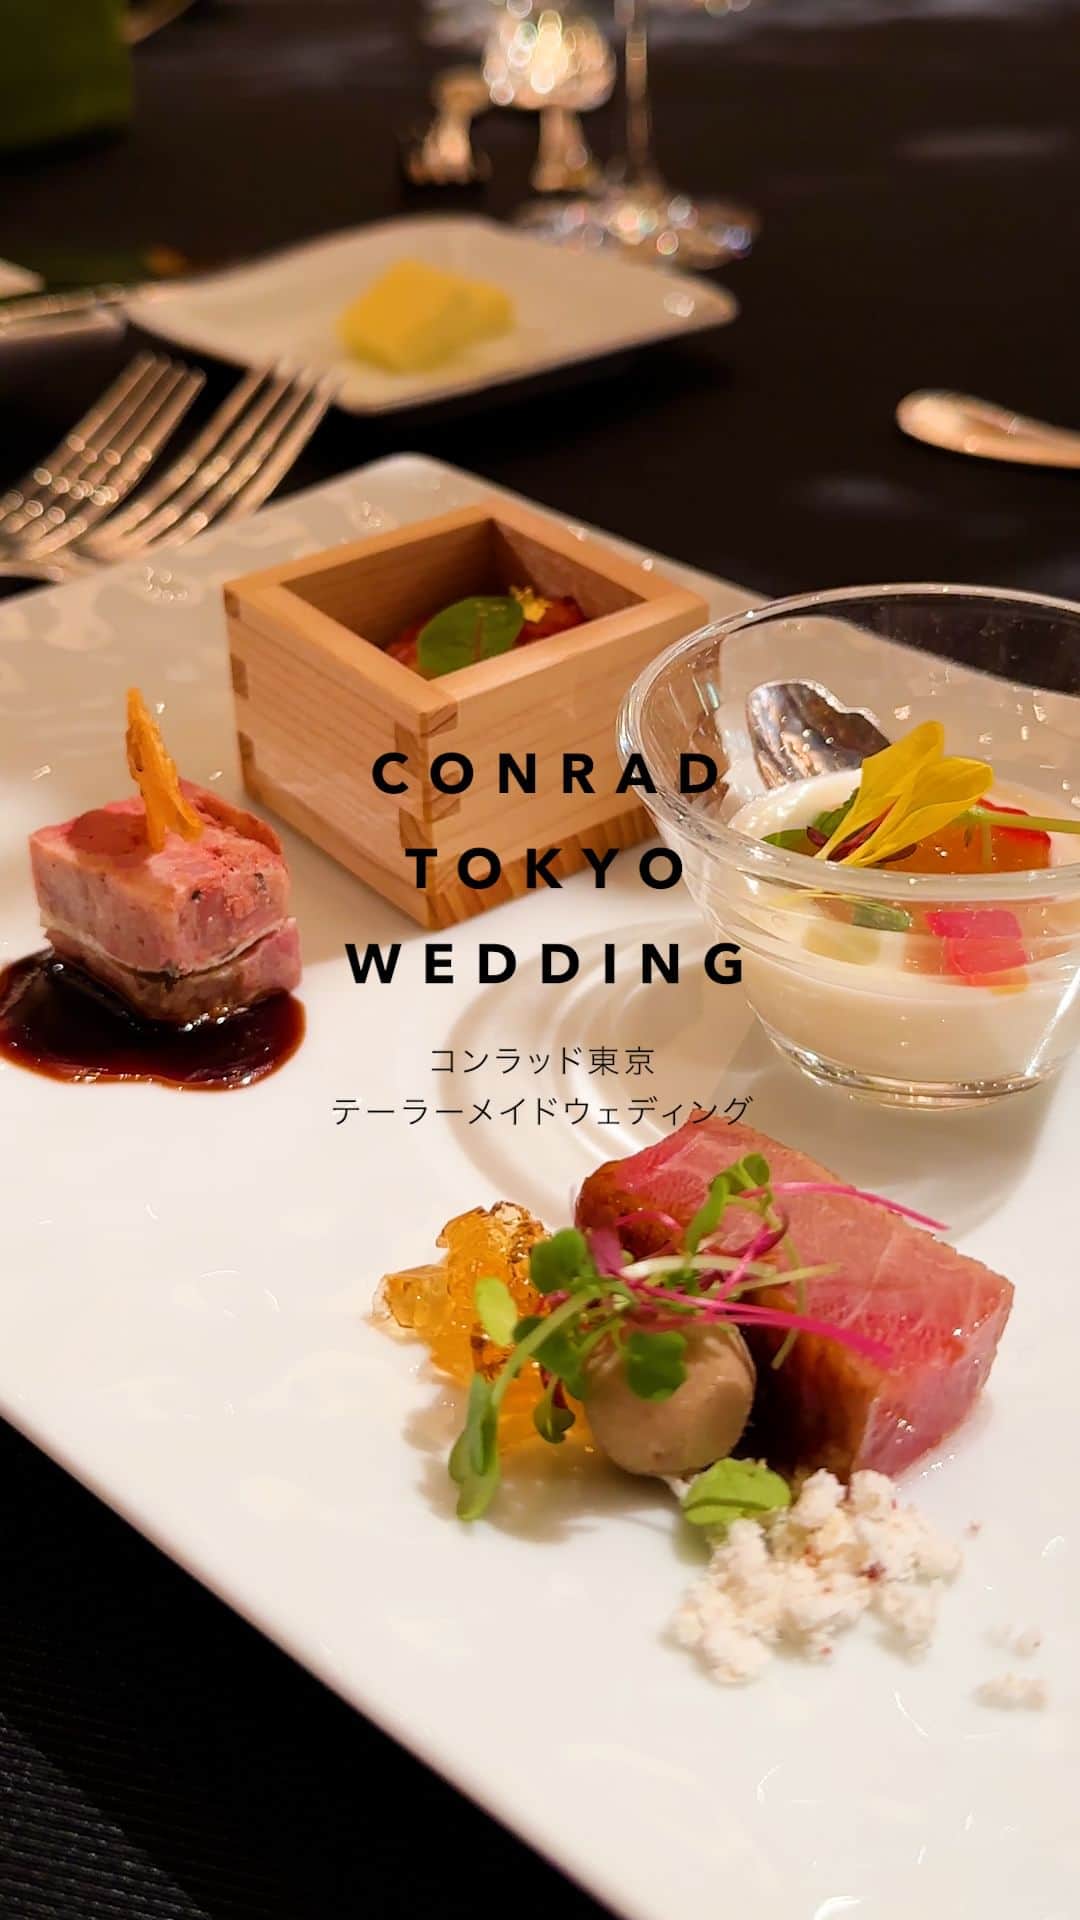 Conrad Tokyoのインスタグラム：「コンラッド東京で至福のウエディングを💍  美しく、味わい豊かな、五感を満足させる極上の逸品を。 美食メニューのご試食、光溢れるチャペル見学、披露宴の優美な装花まで、コンラッド花嫁のエッセンスを感じるフェアを開催します。  #コンラッド東京 #コンラッド #東京ホテル #ホテル #ラグジュアリーホテル #ホテル #ホテルライク #ホテルステイ #ホカンス #おすすめホテル #ステイケーション #ウェディング #ウェディングドレス  #ウェディングフェア # #ホテルウェディング #結婚式  #結婚式場 #結婚式準備  #conradtokyo #conrad #hotel #tokyohotel #luxuryhotel #tokyorestaurant #tokyotrip #tokyosweets #wedgwood #afternoontea #wedding #weddingplanning」